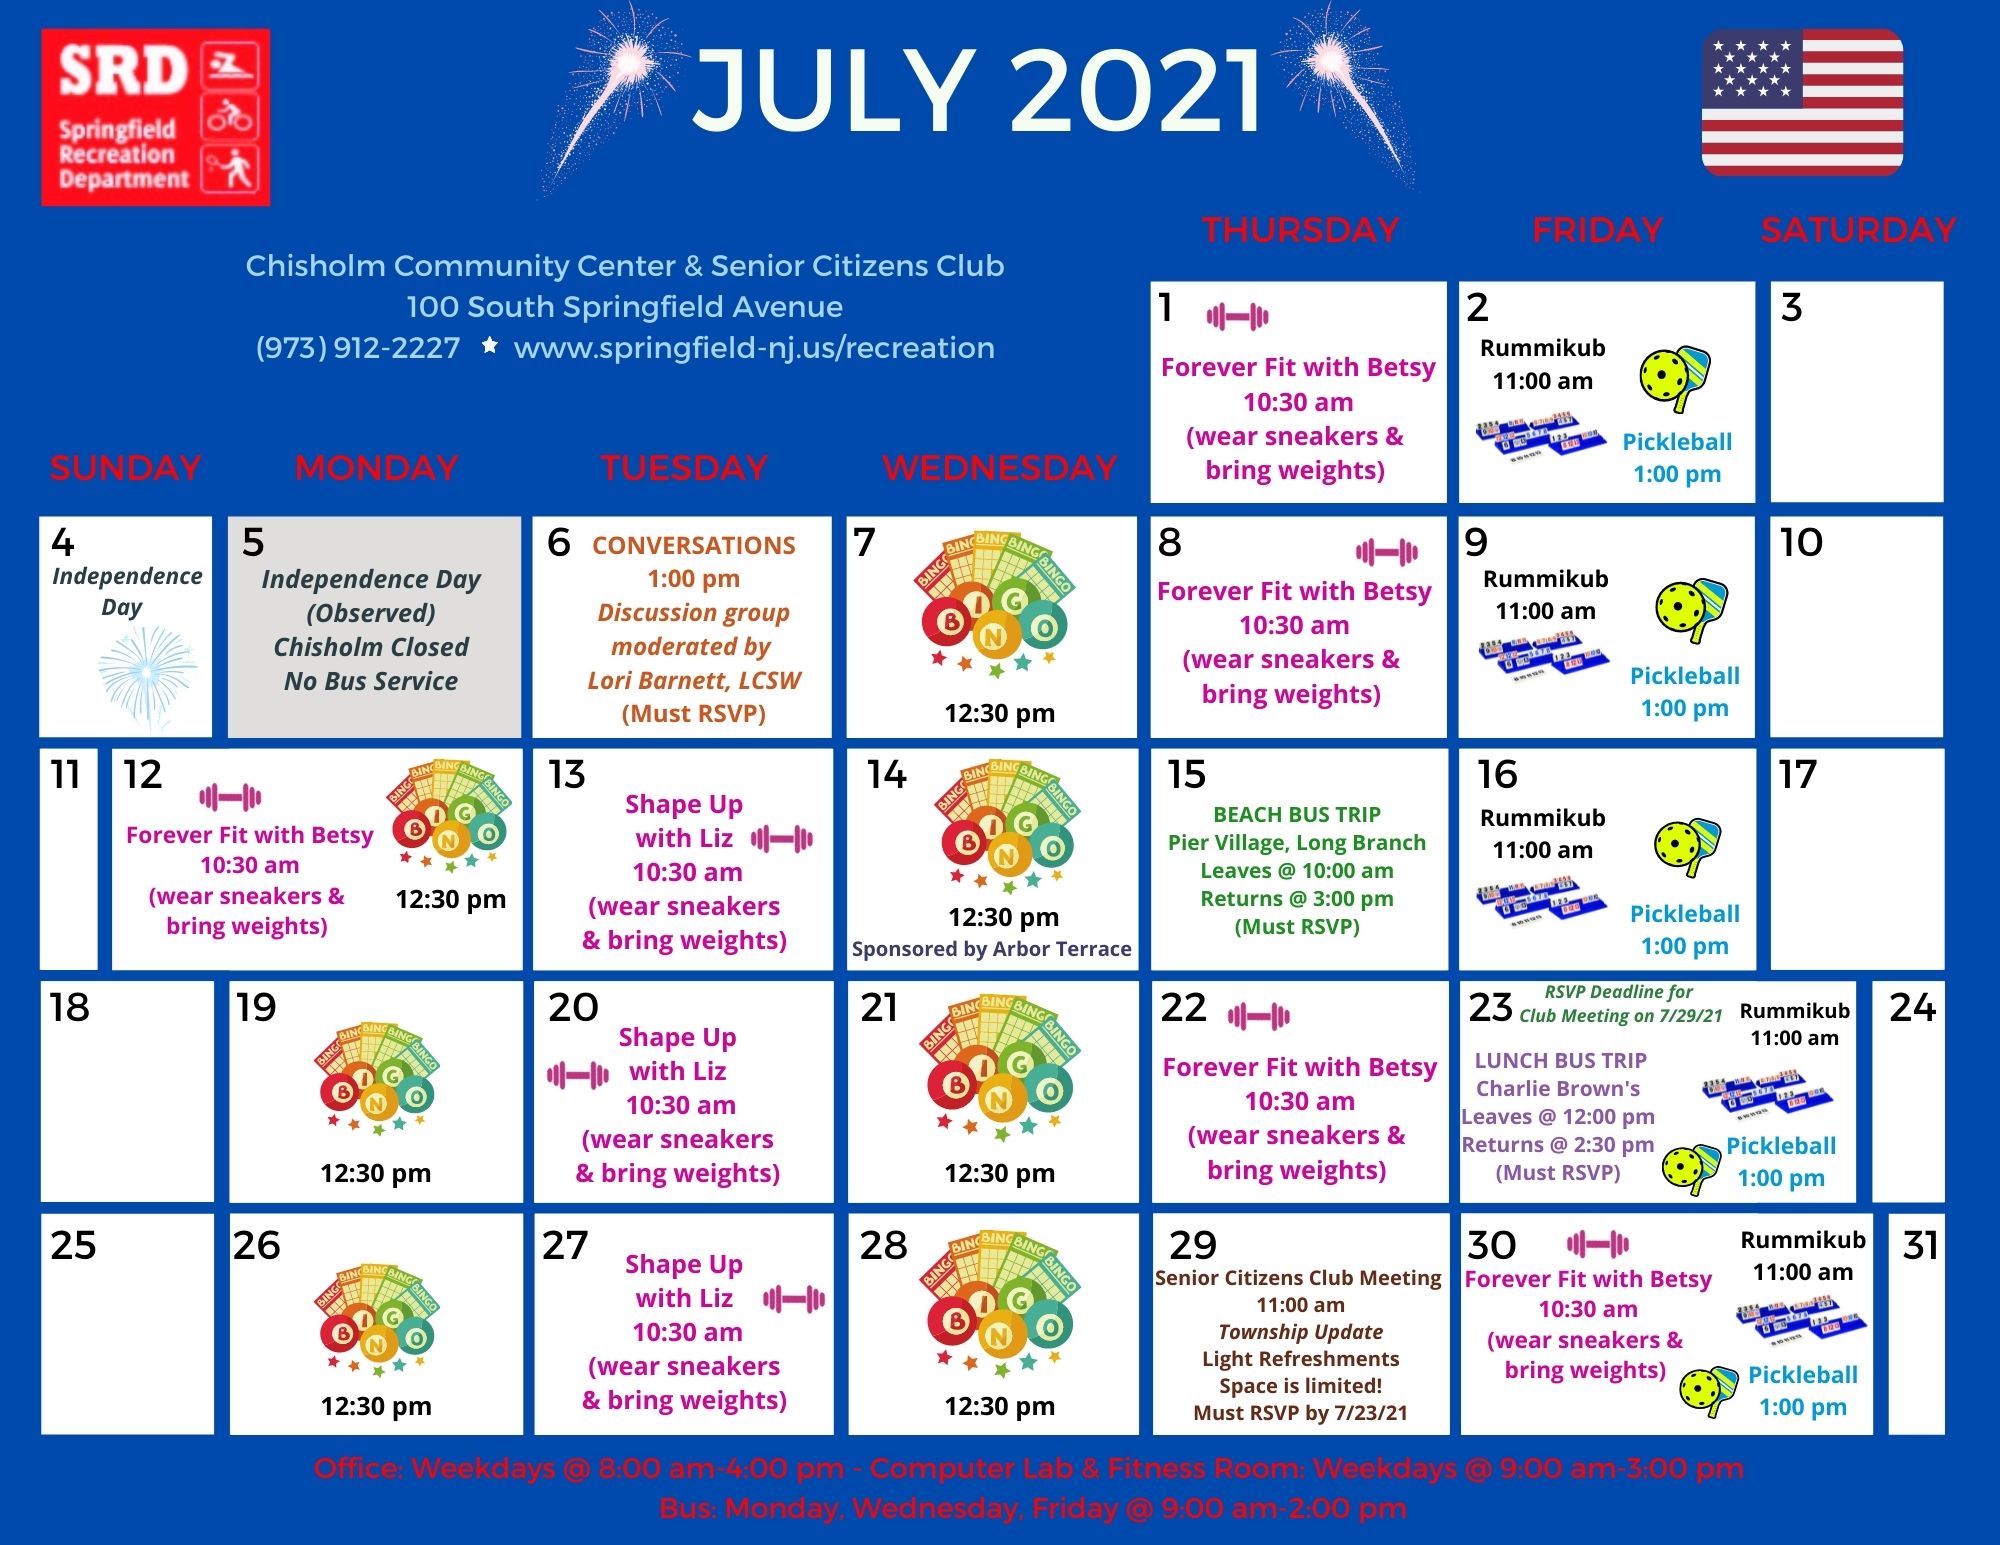 Recreation Department Releases July 2021 Calendar for Senior Citizens